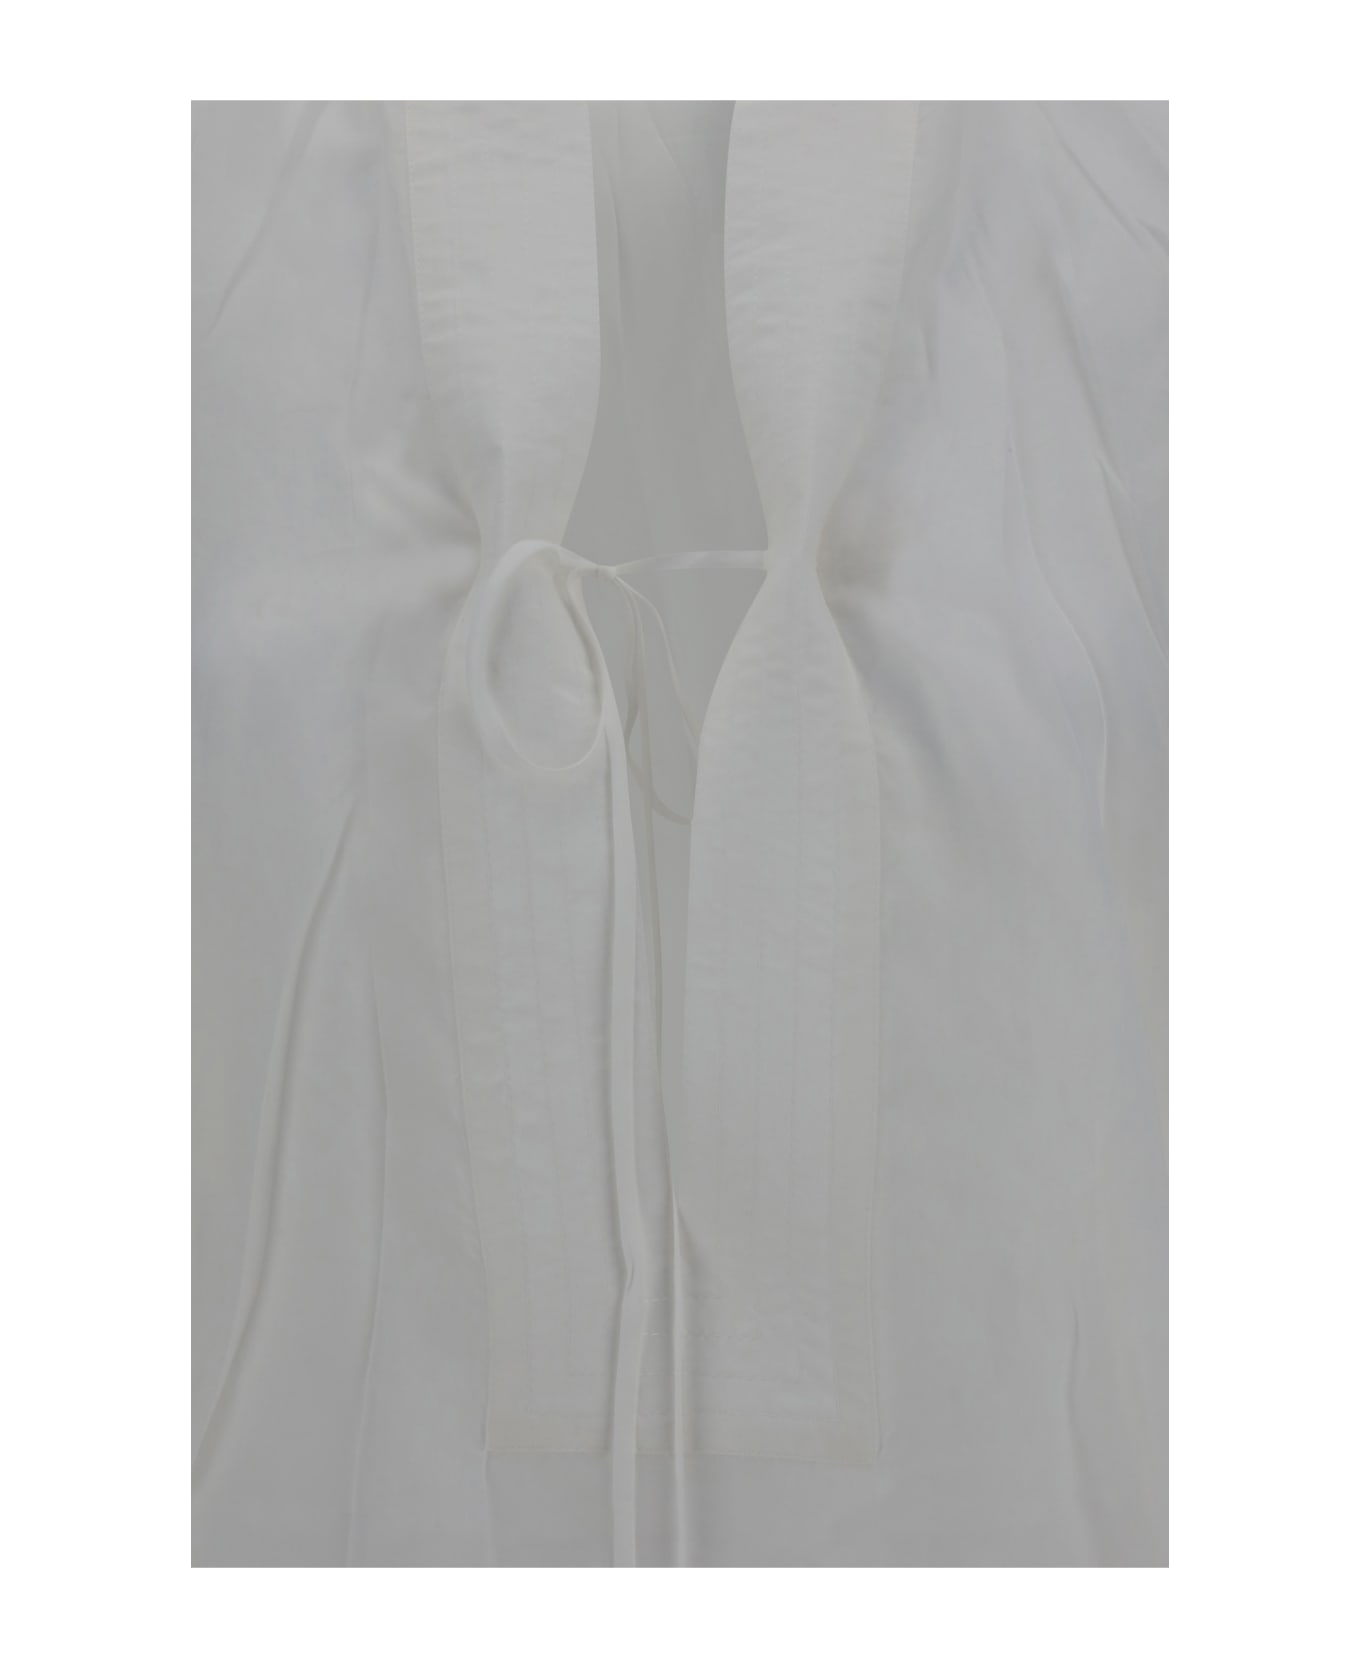 Ferragamo Tunic Shirt - White ブラウス